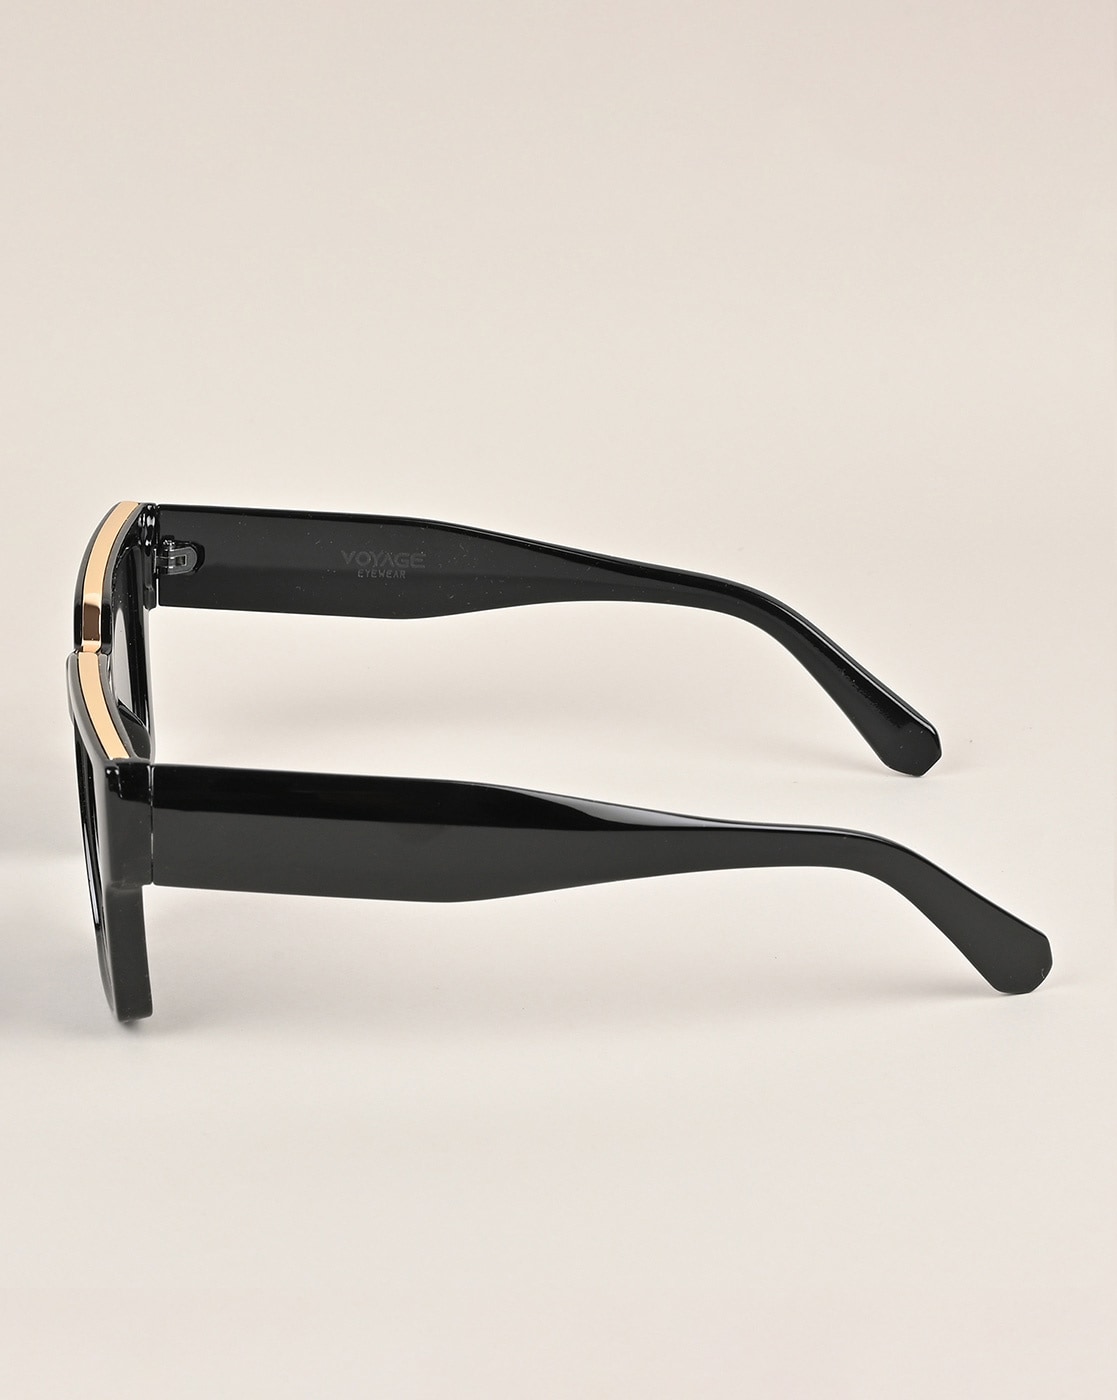 Shop Longway Tortoise/Mirror Sunglasses for Men